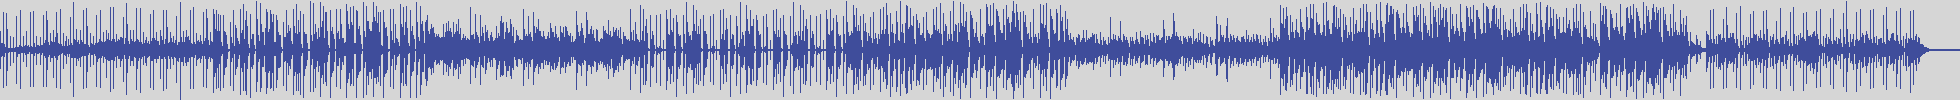 noclouds_chillout [NOC020] Bradley Young - Across the Planet [Velvet Sofa Mix] audio wave form